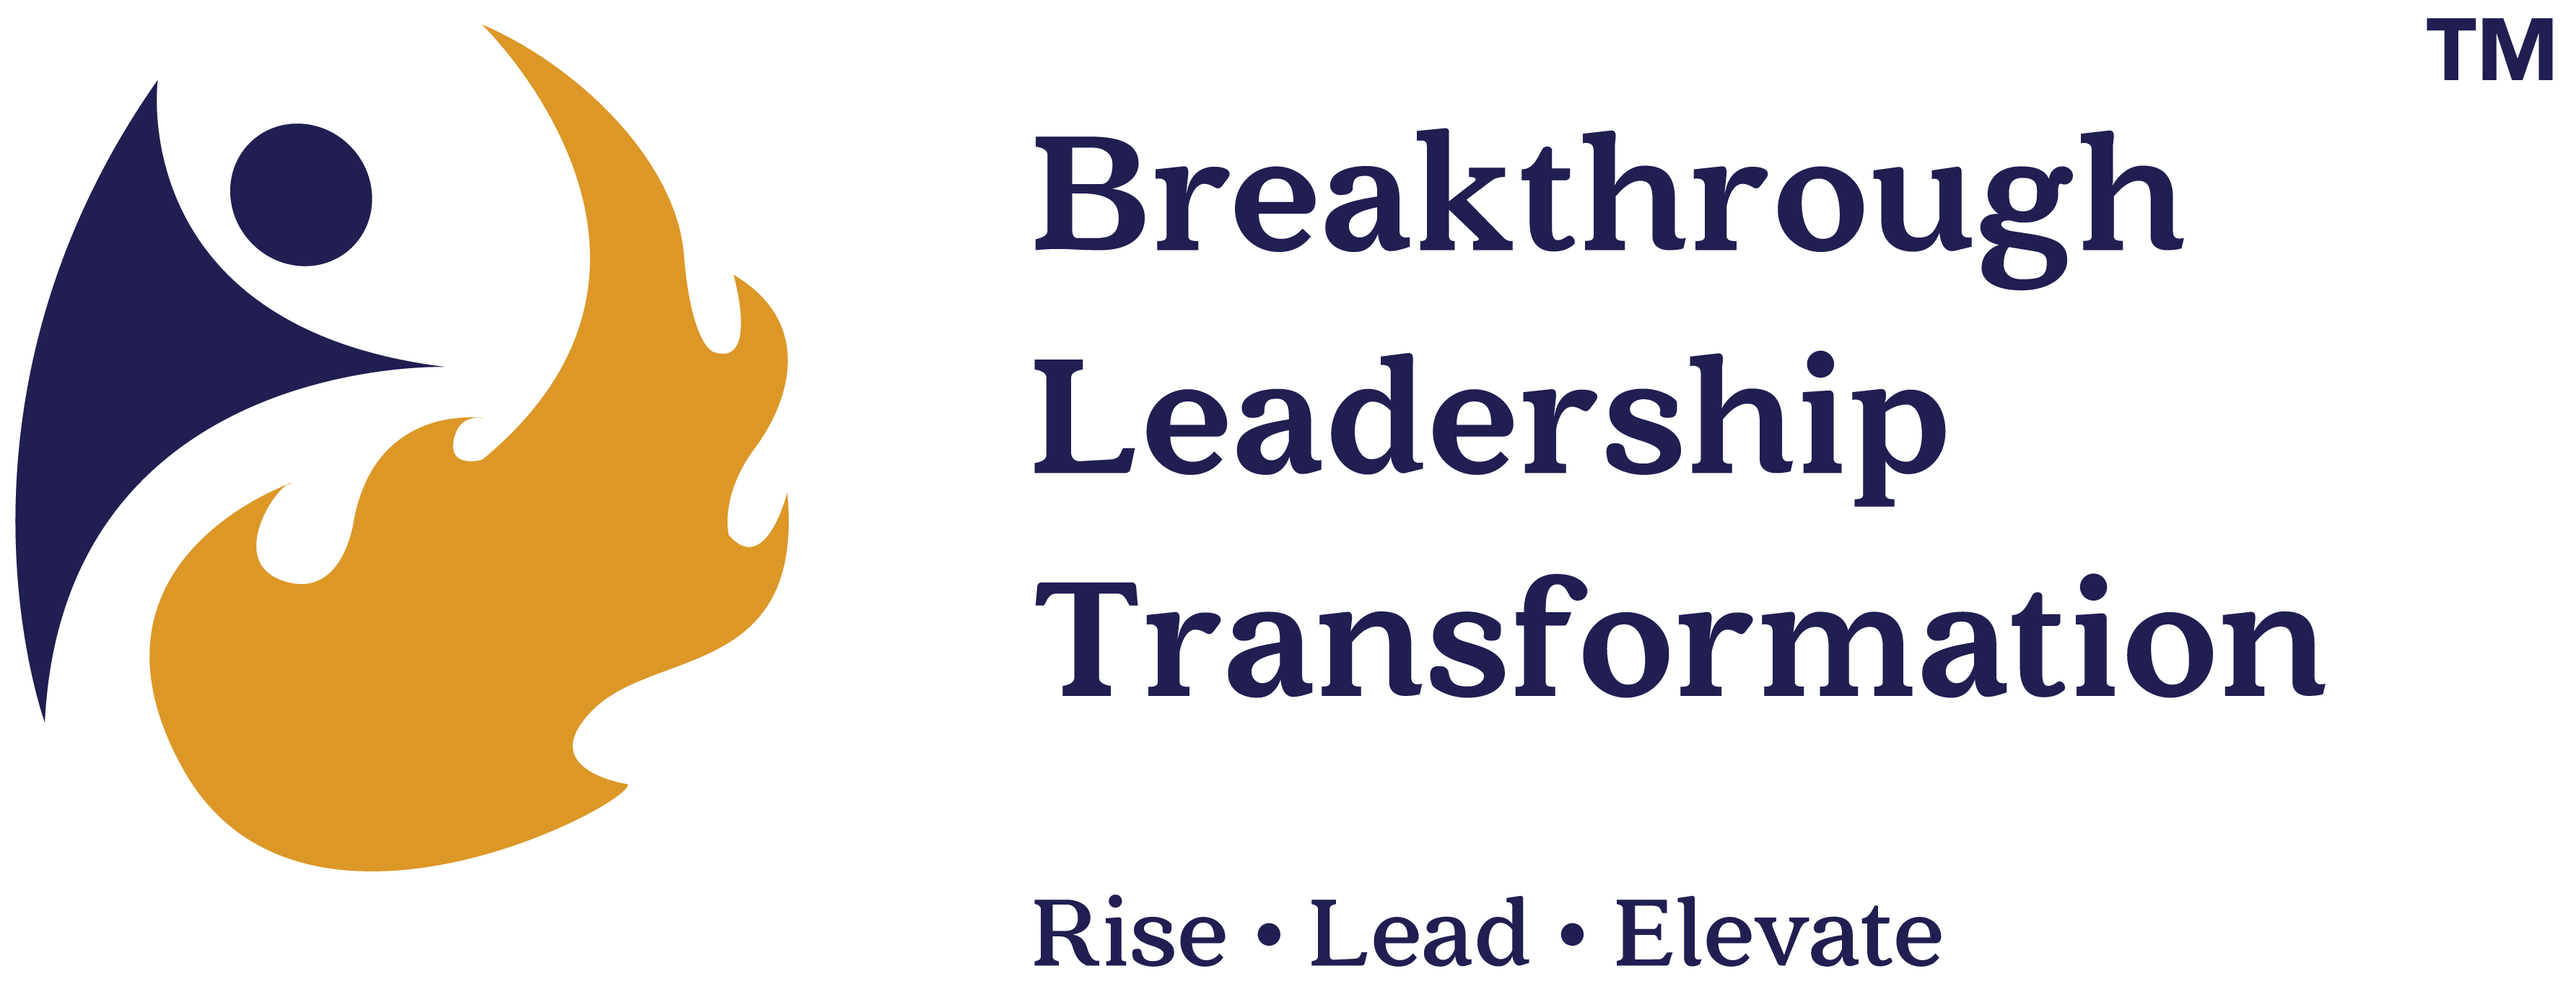 Breakthrough Leadership Transformation